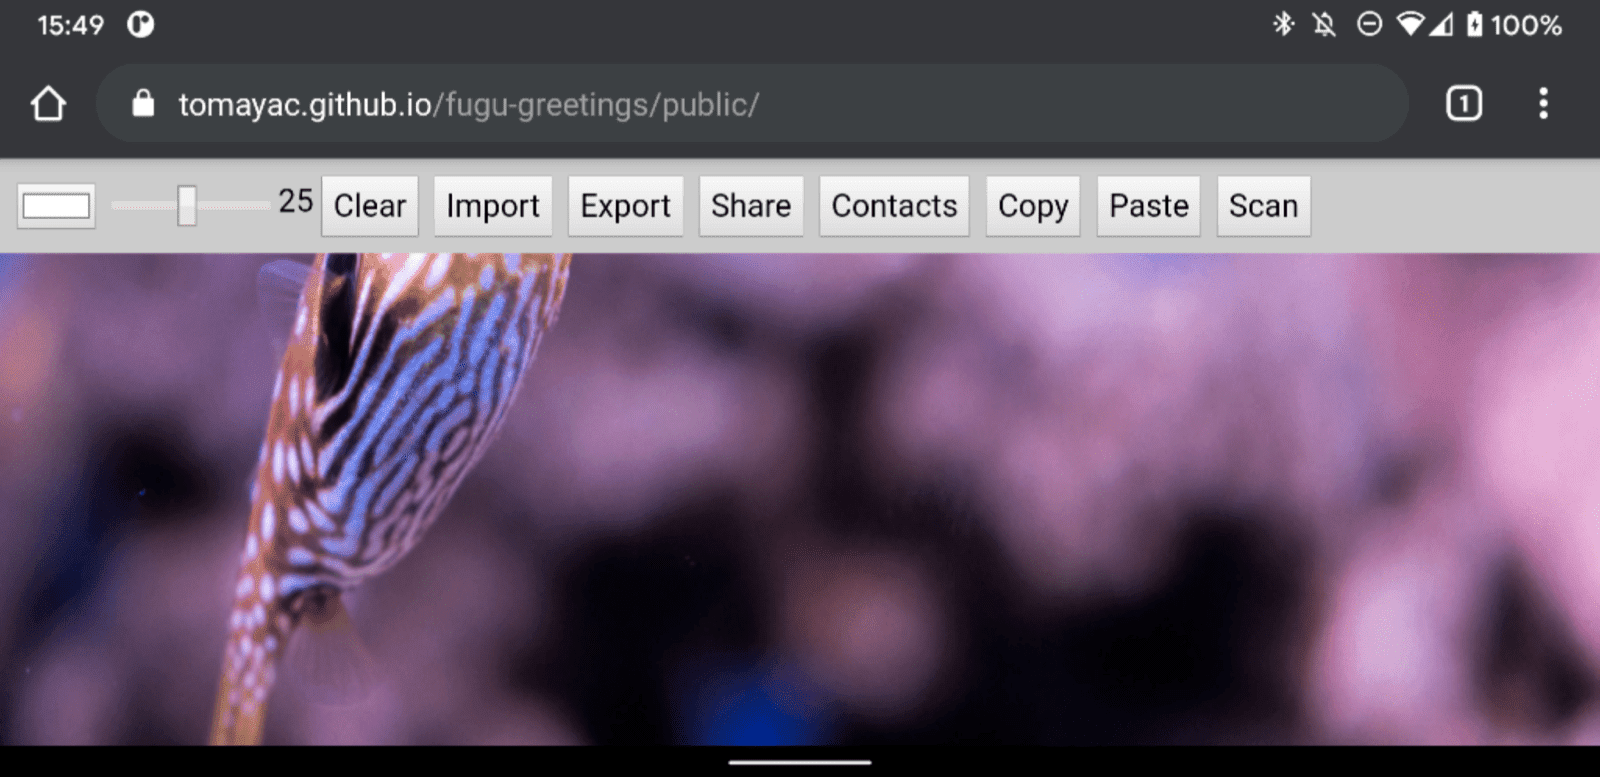 Fugu Greetings در Android Chrome اجرا می شود و بسیاری از ویژگی های موجود را نشان می دهد.